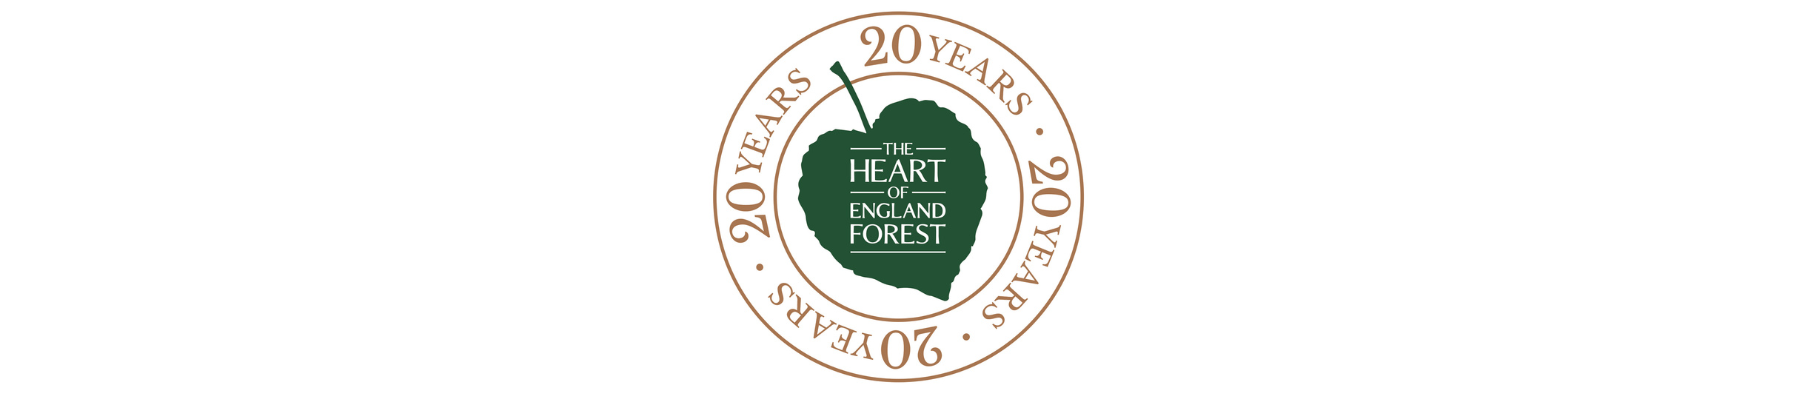 The 20th year anniversary logo